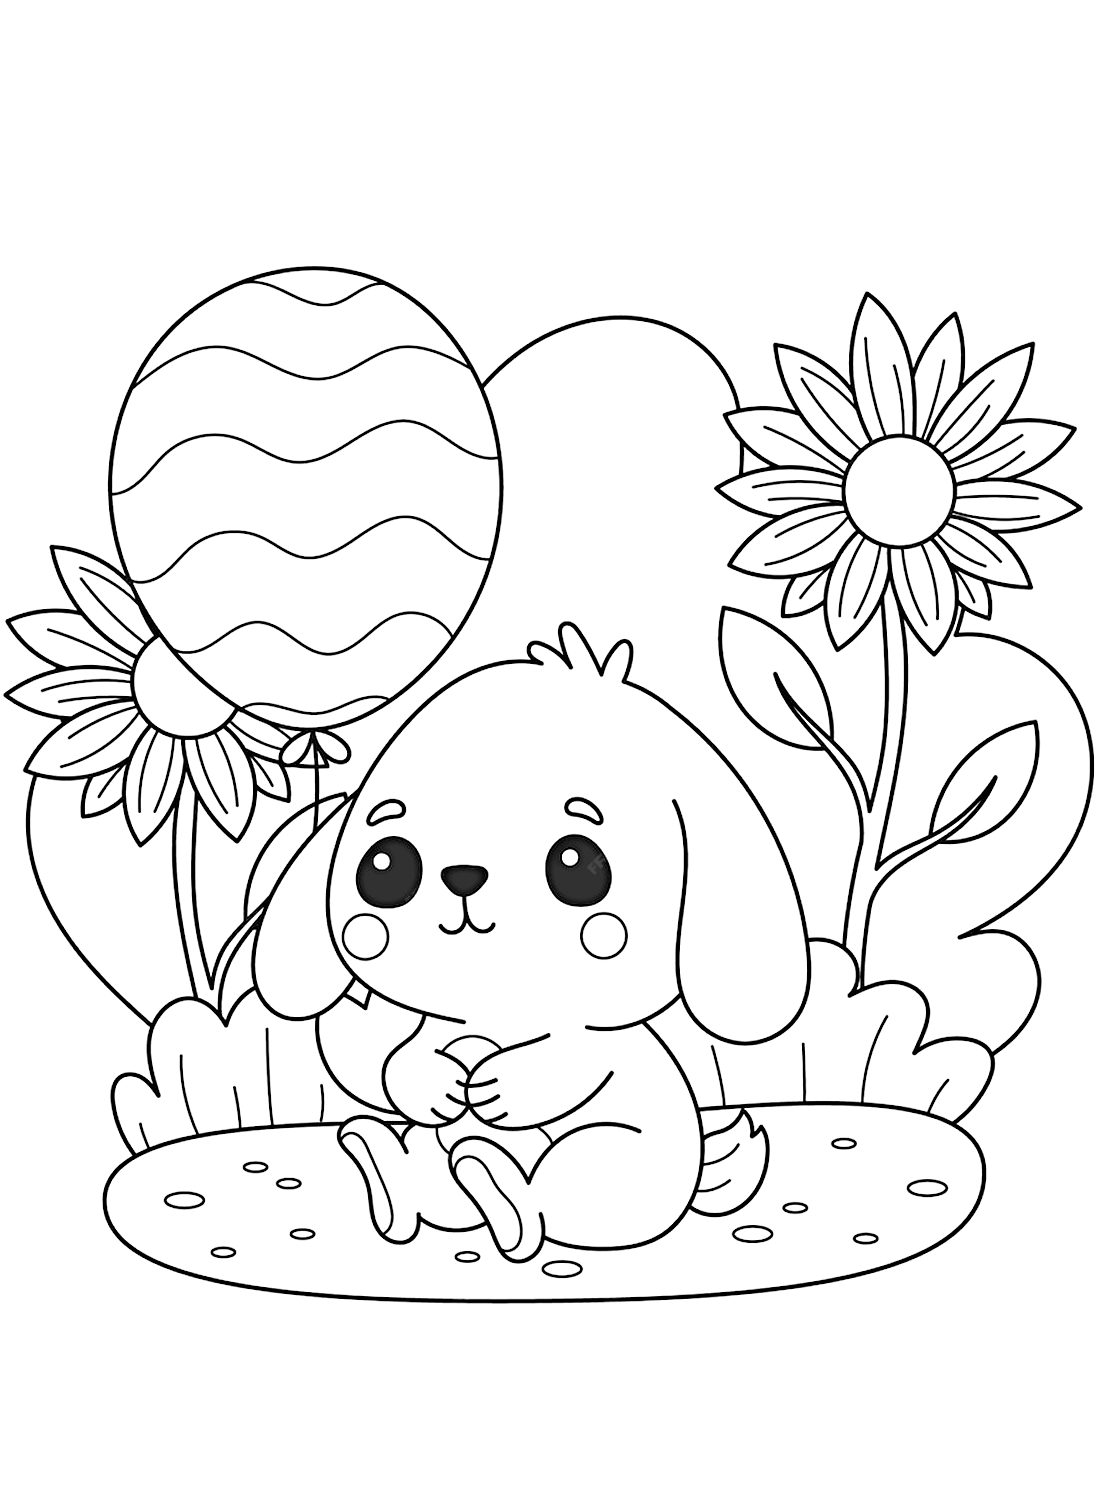 The Cartoon Puppy Sheet from Puppy